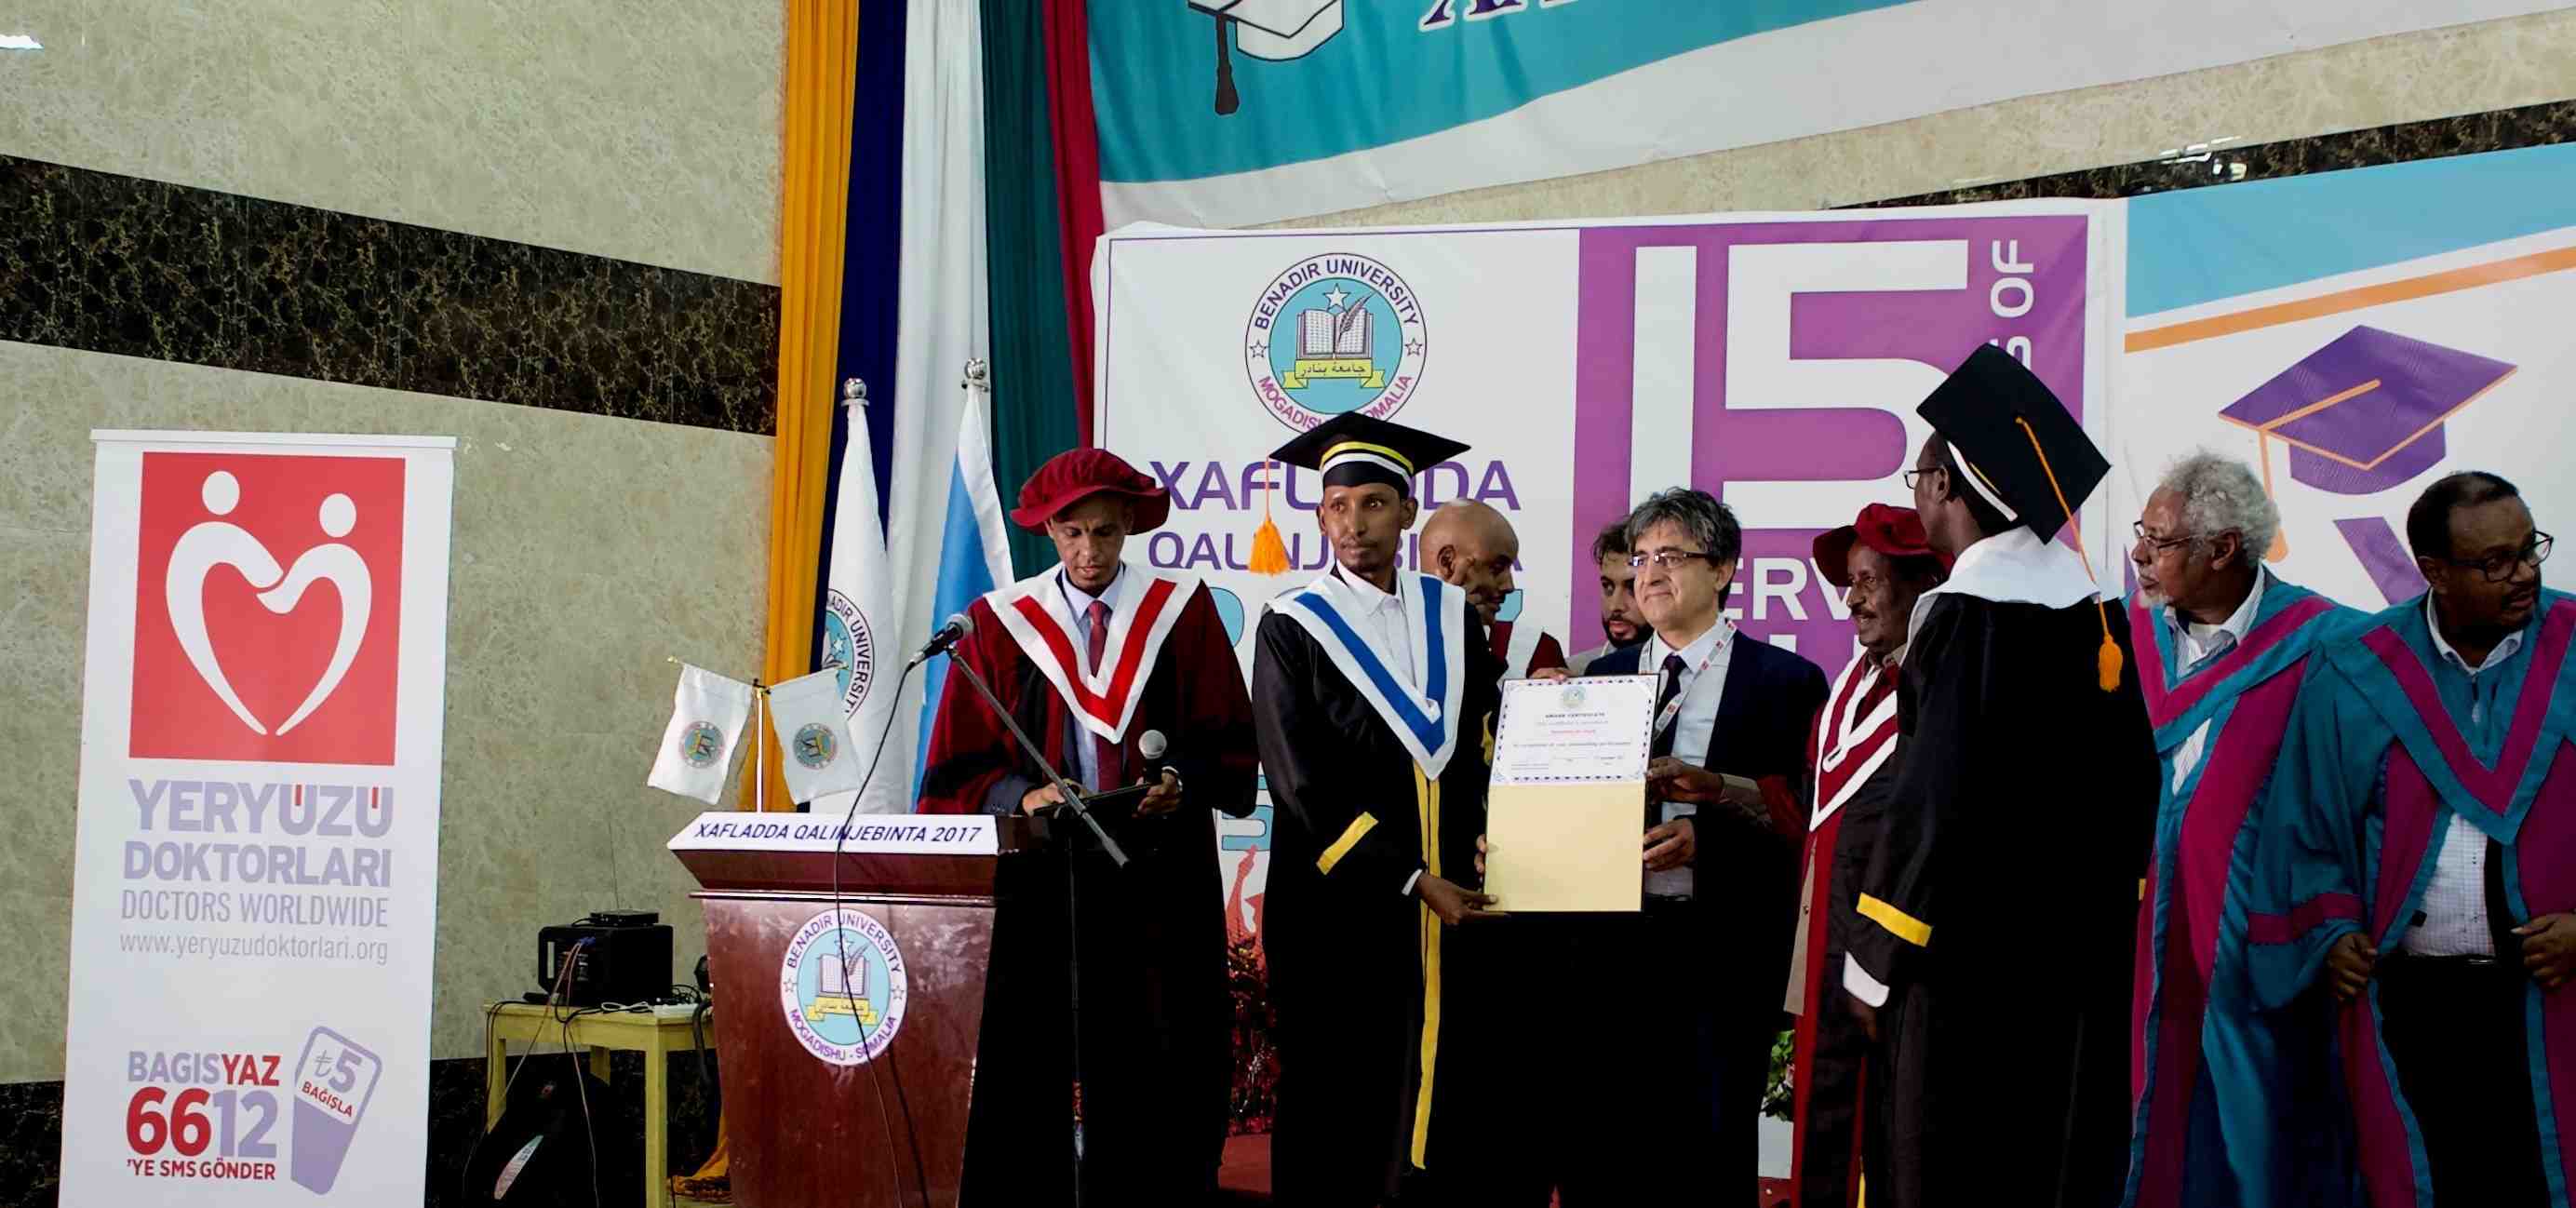 Five More Doctors Graduated İn Somalia